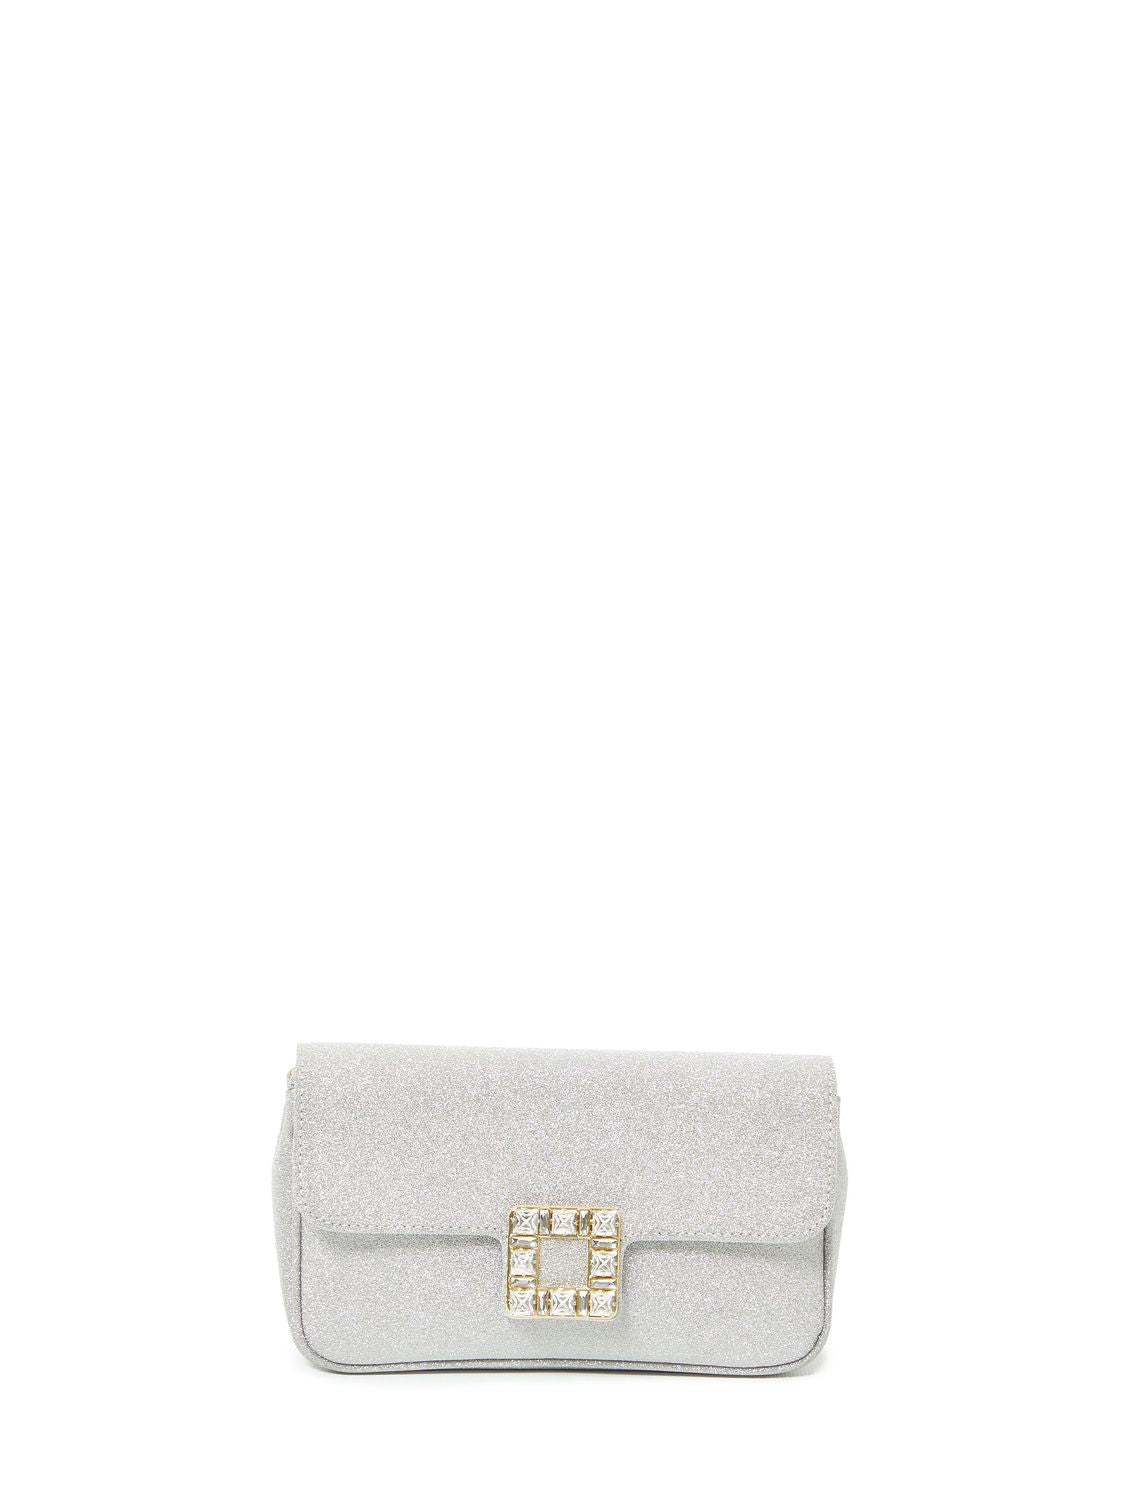 Silver Glitter Pouch Handbag